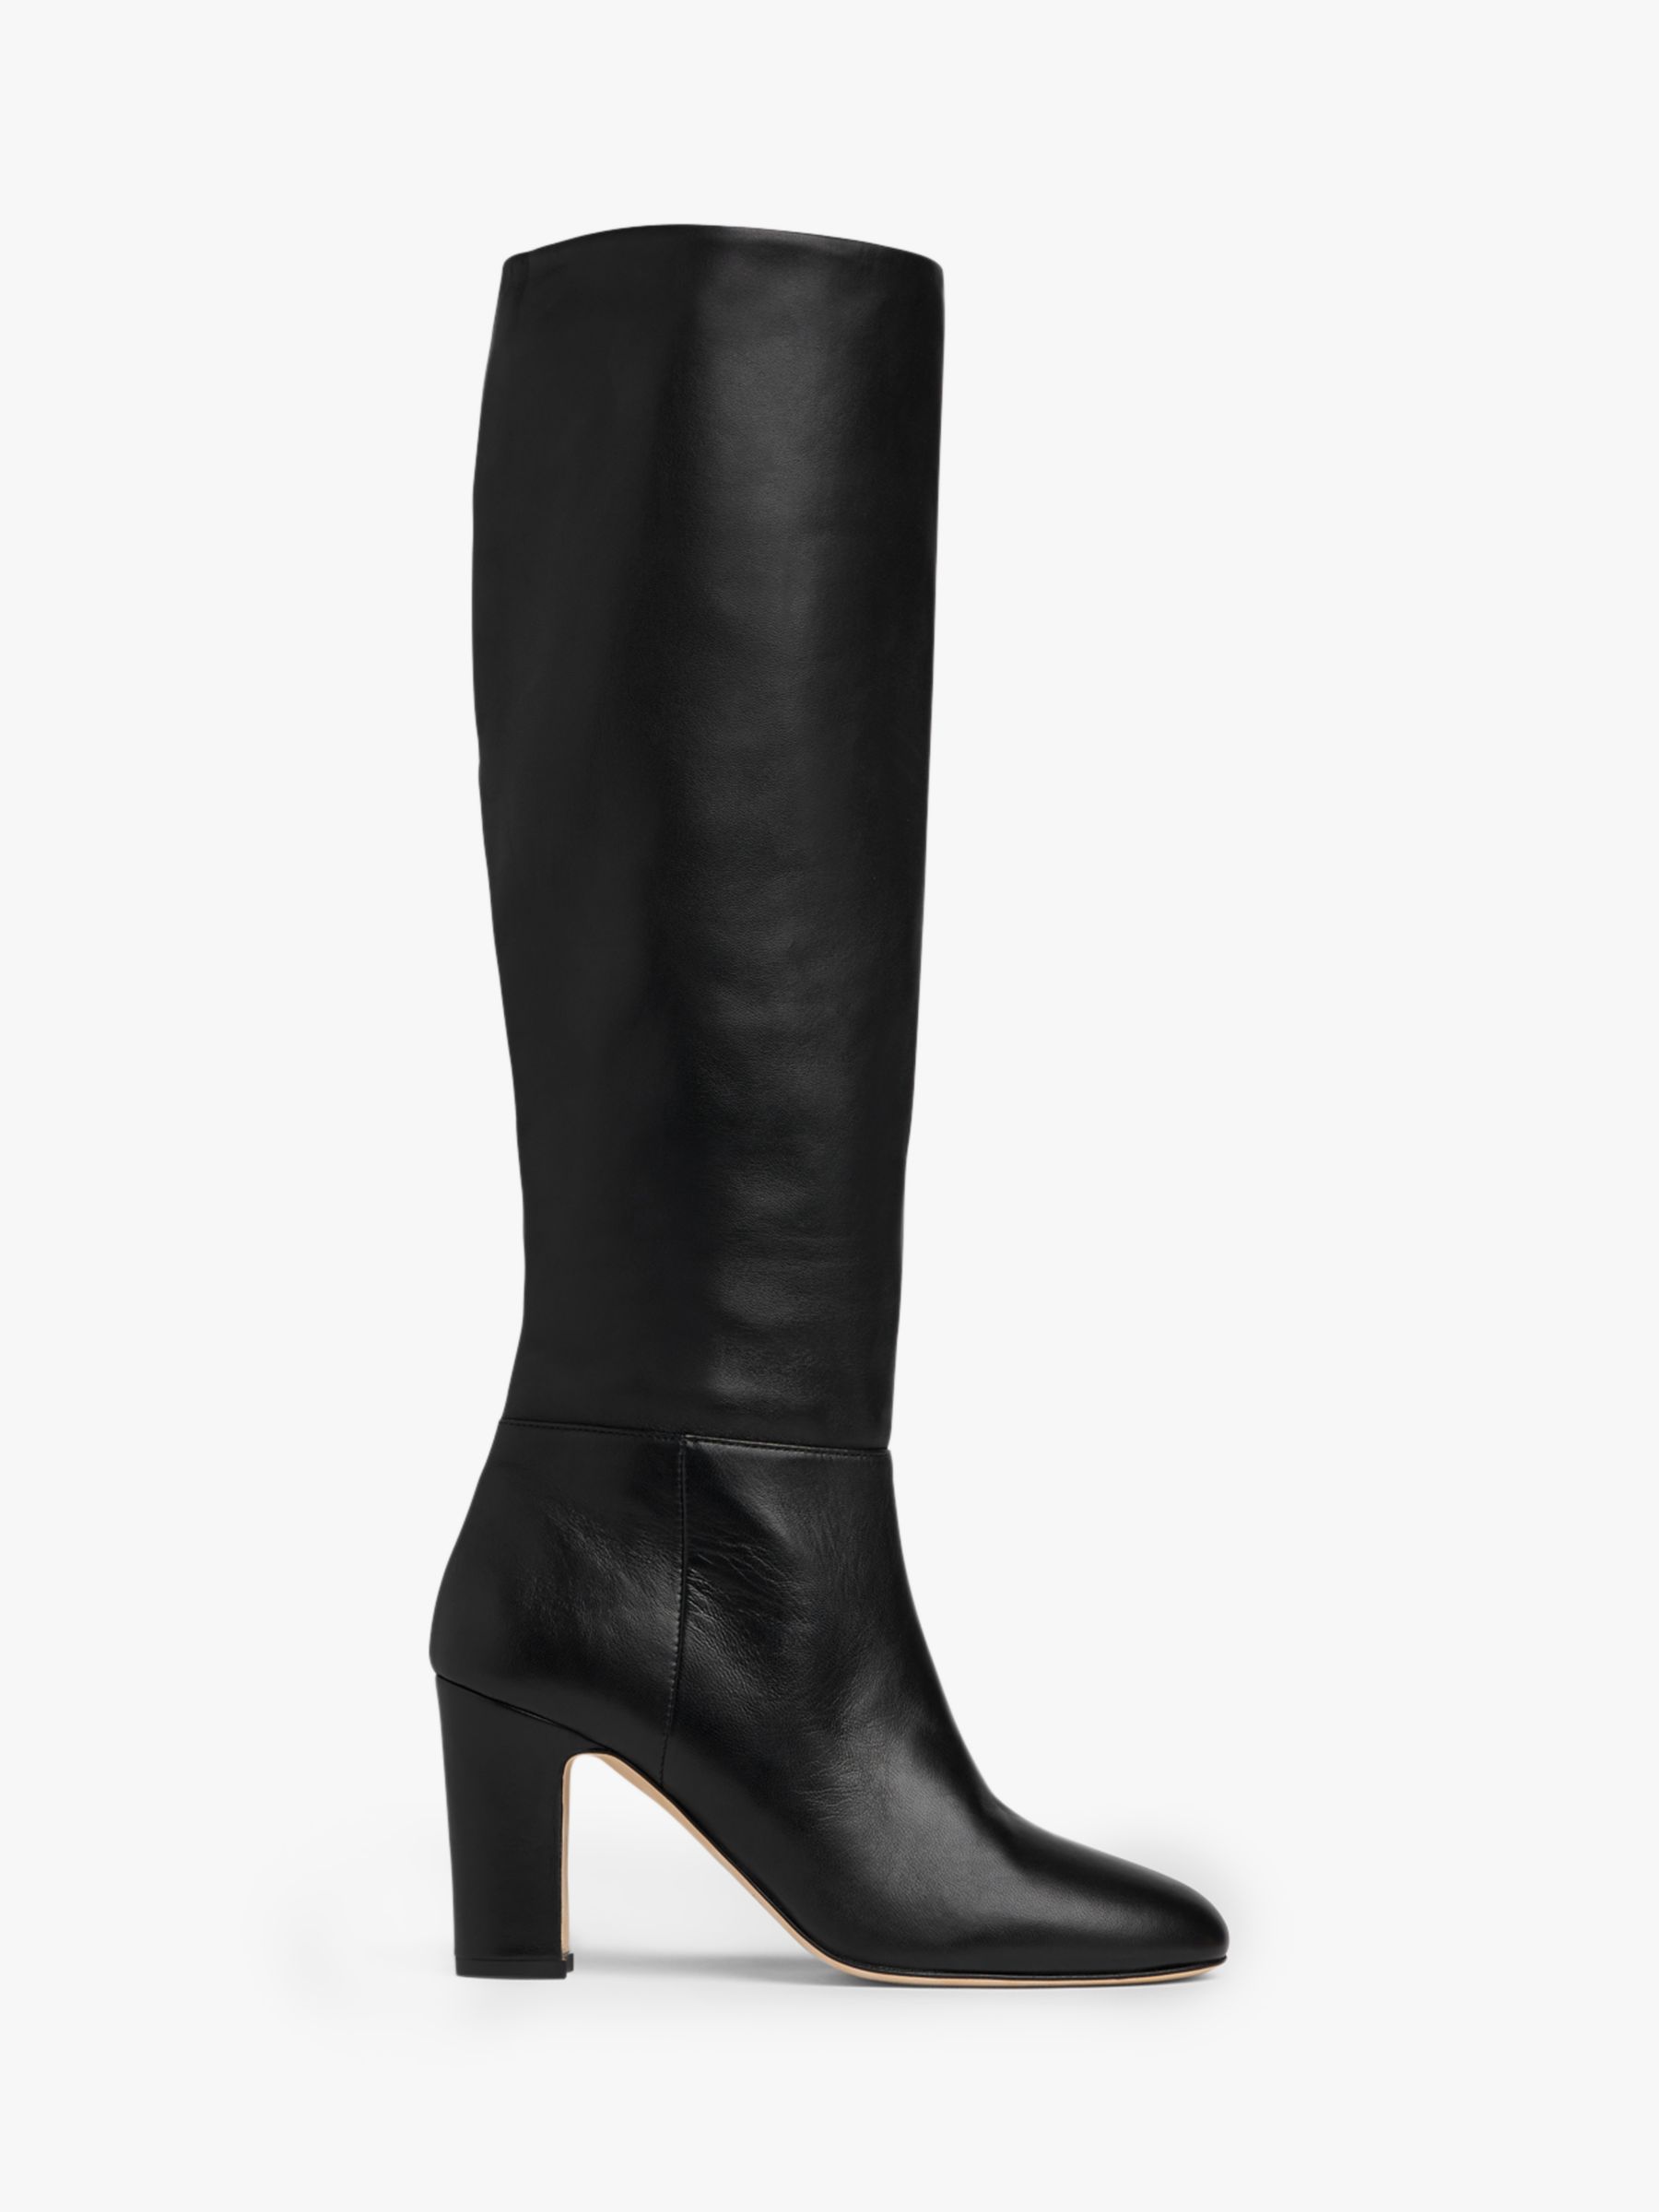 L.K.Bennett Kristen Leather Knee High Boots, Black at John Lewis & Partners